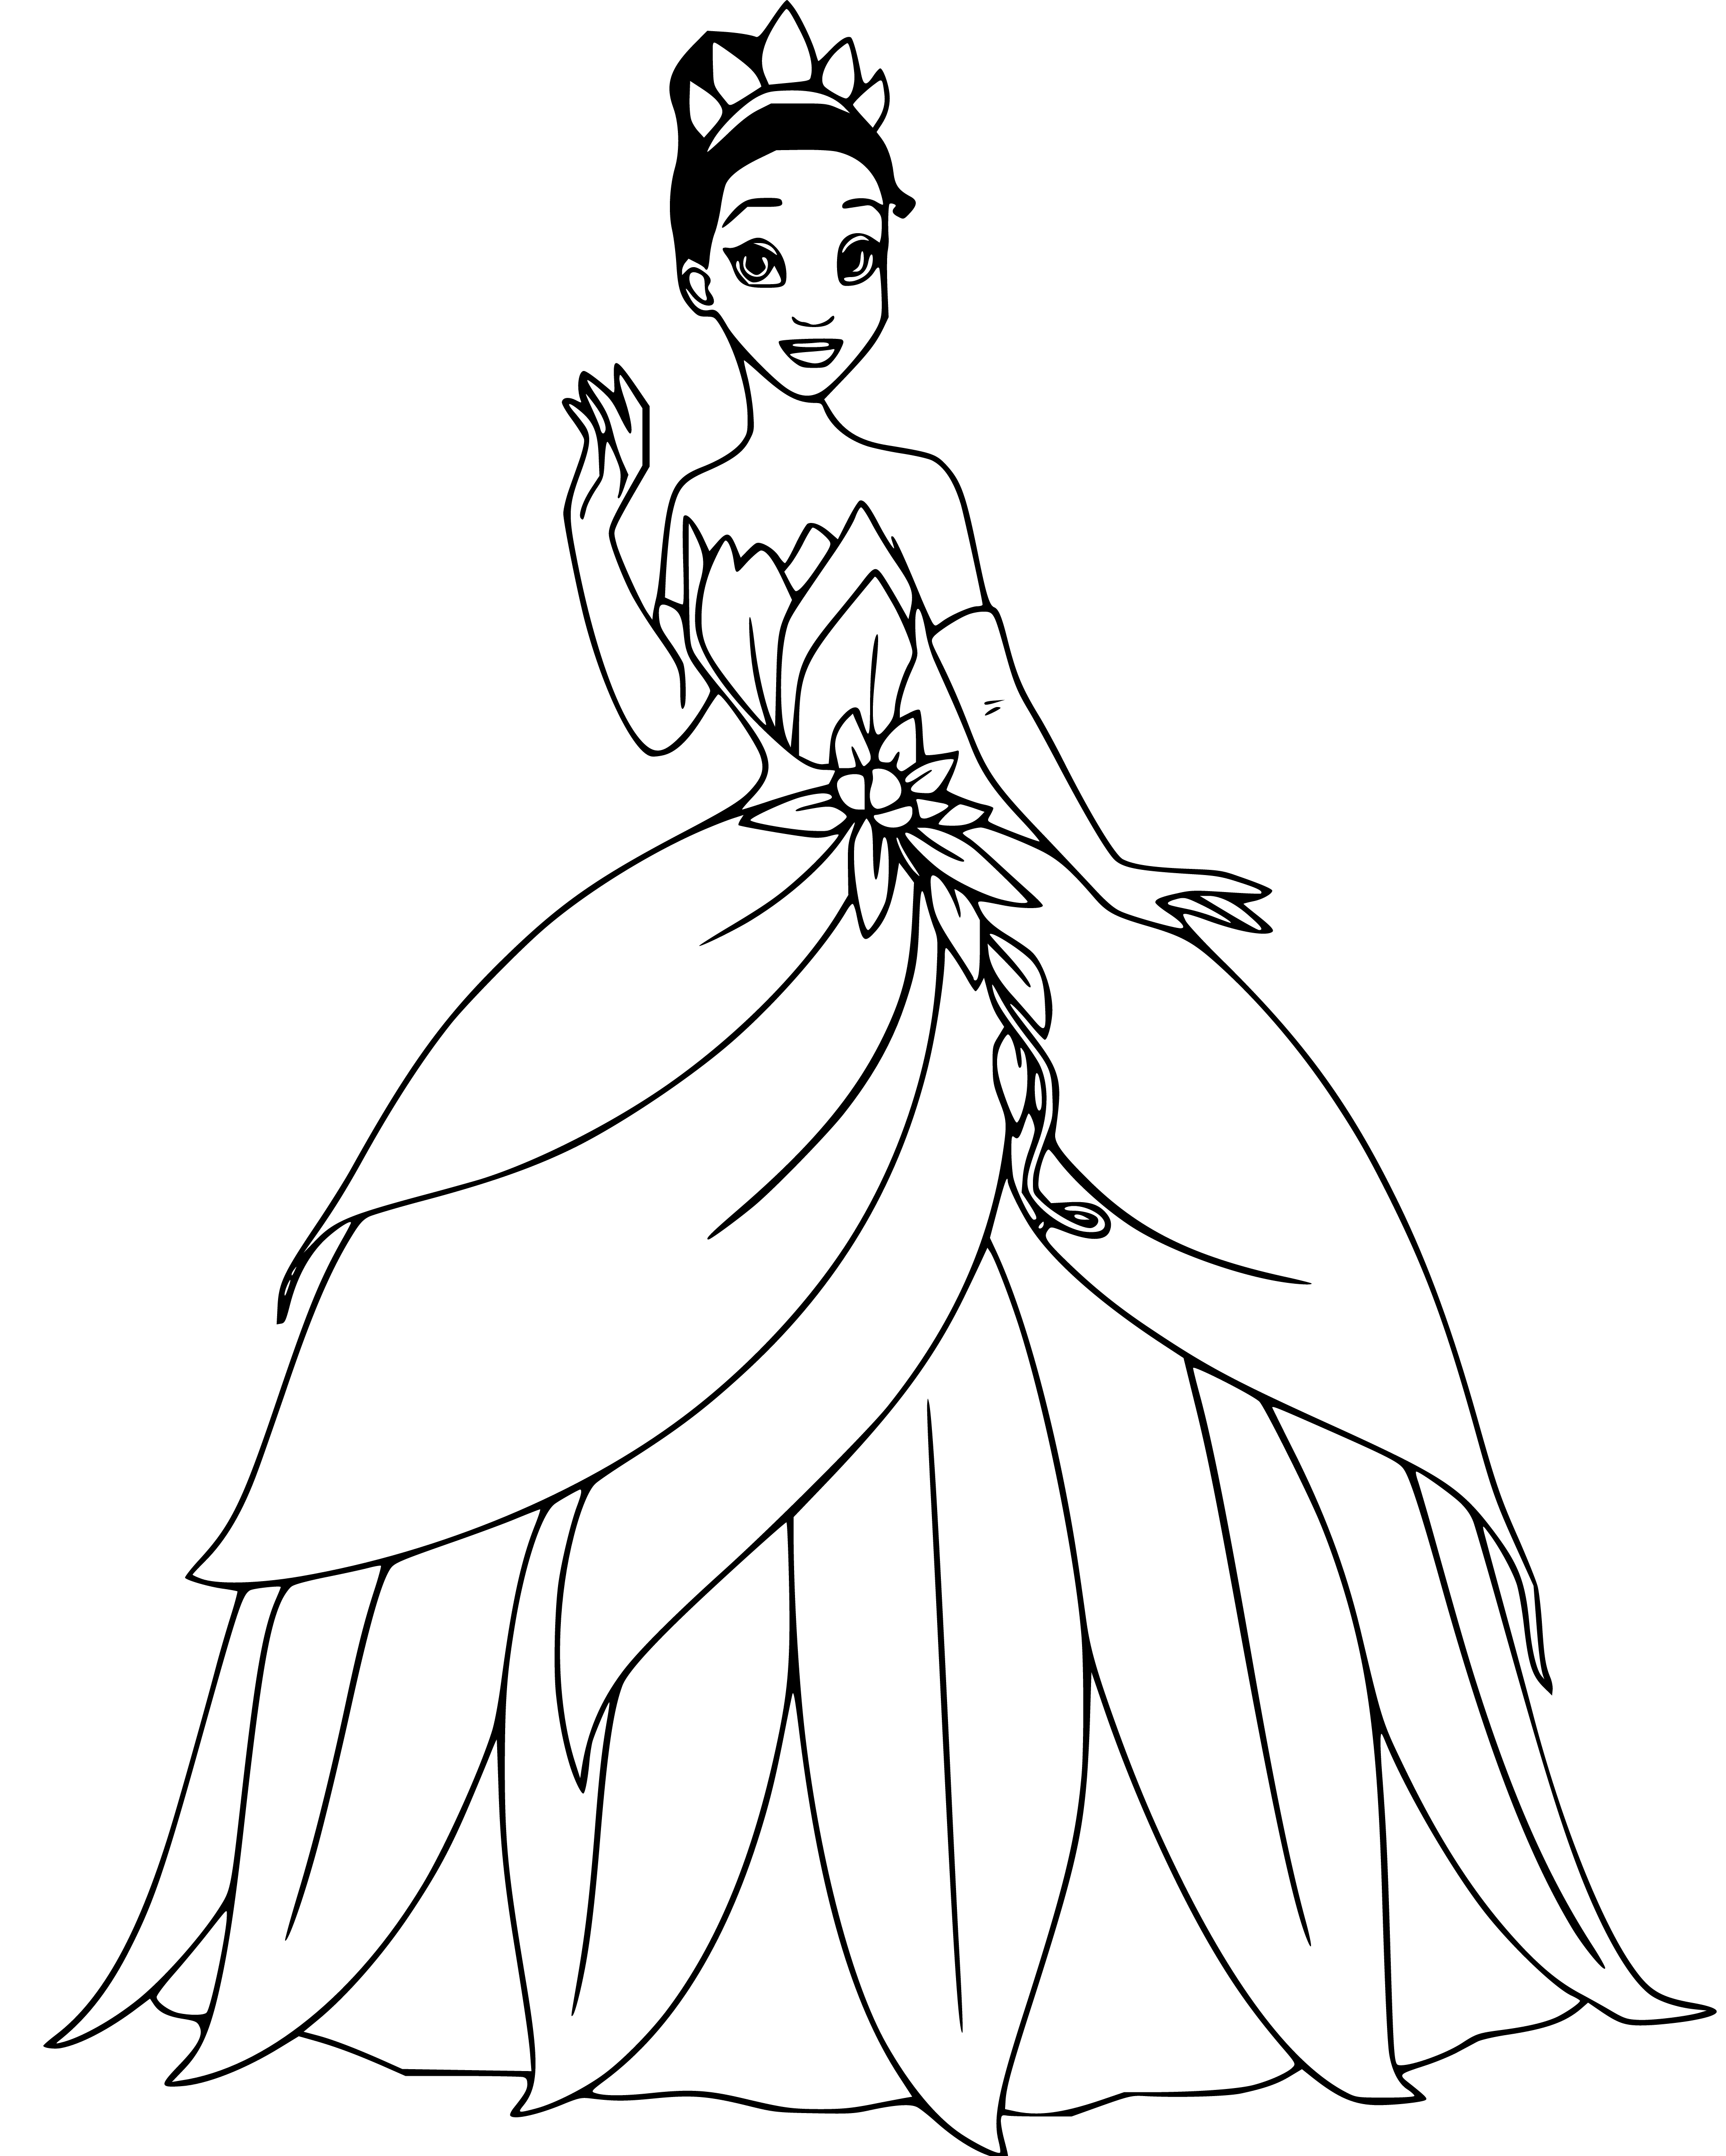 Beautiful Princess Tiana Coloring Page for Kids to Print - SheetalColor.com